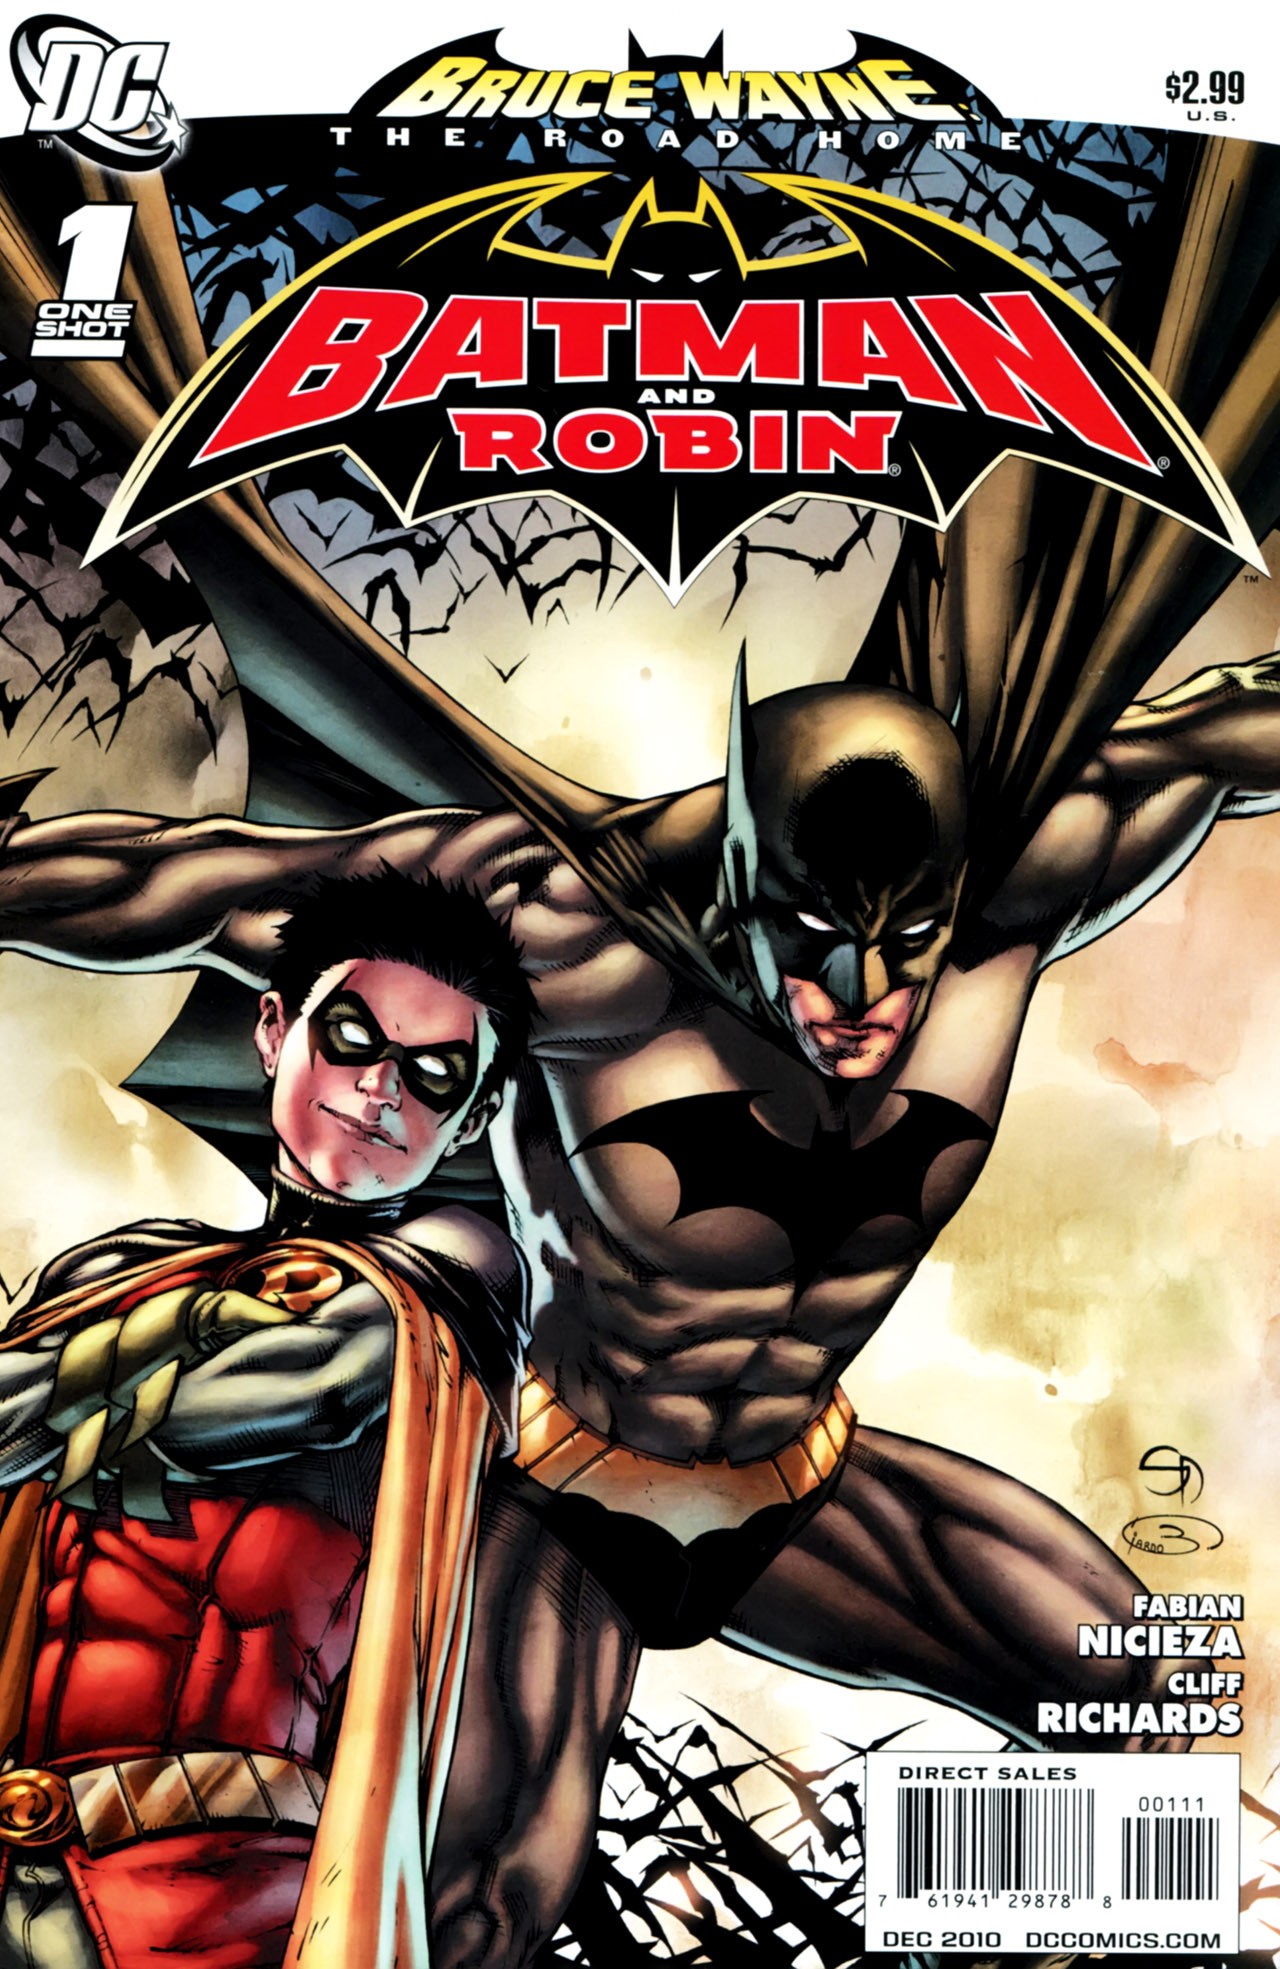 Bruce Wayne: The Road Home: Batman and Robin Vol. 1 #1